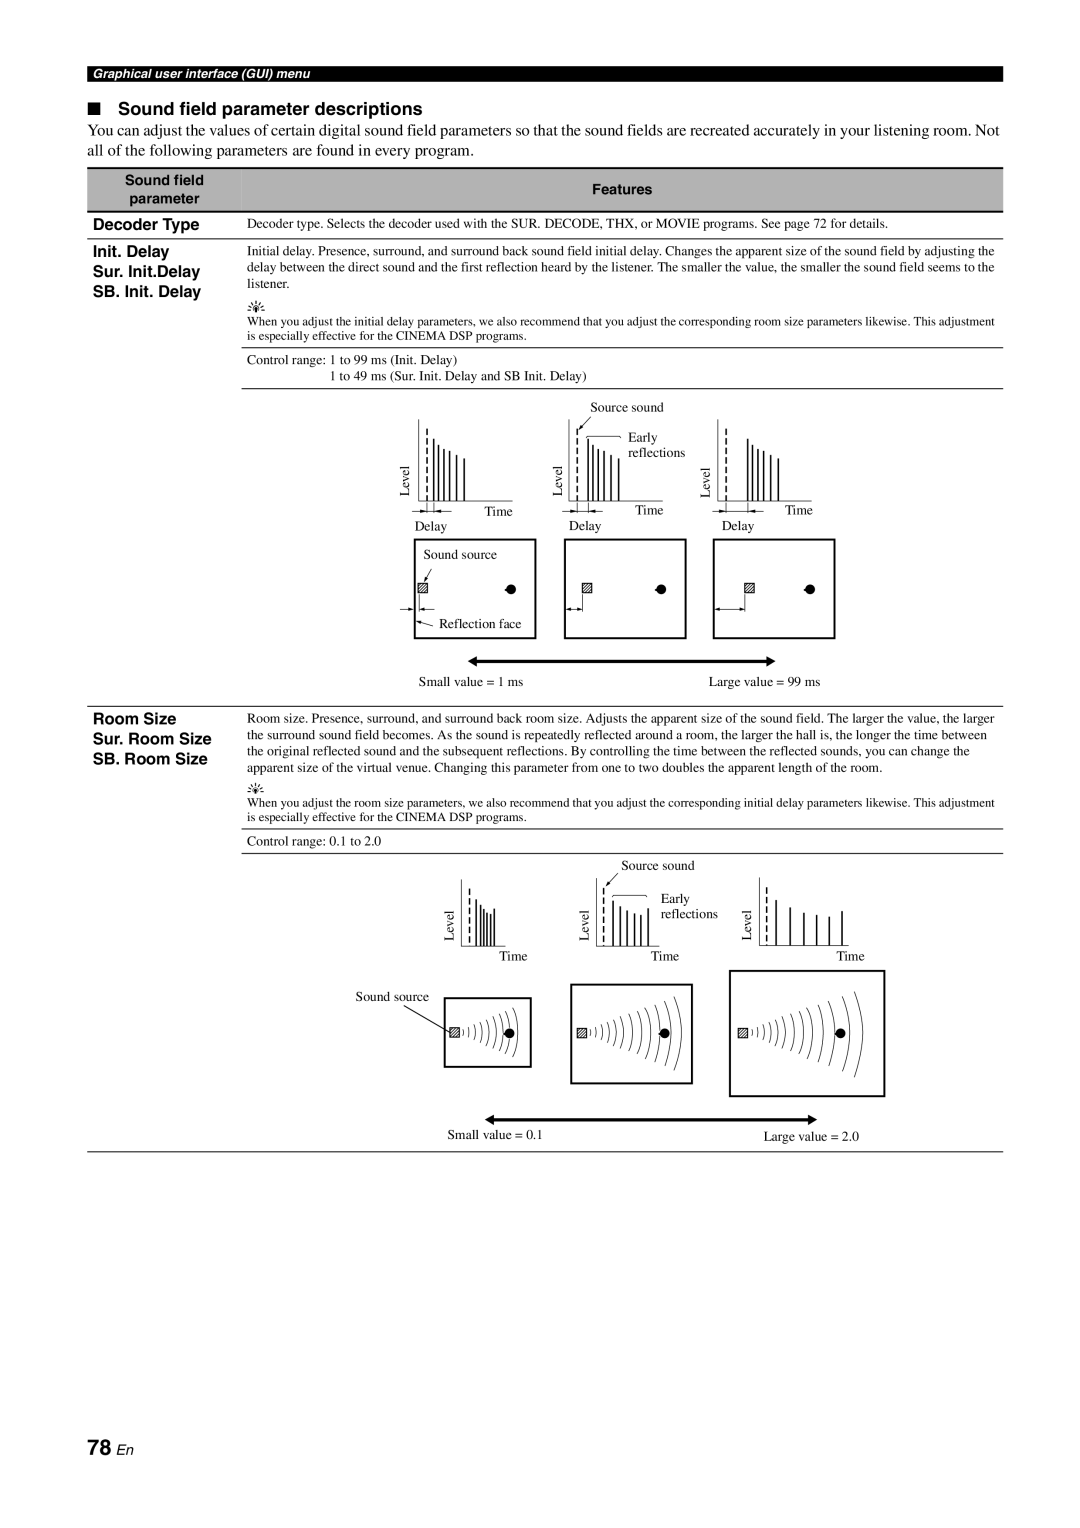 Yamaha DSP-Z11 owner manual 78 En, Sound field parameter descriptions 